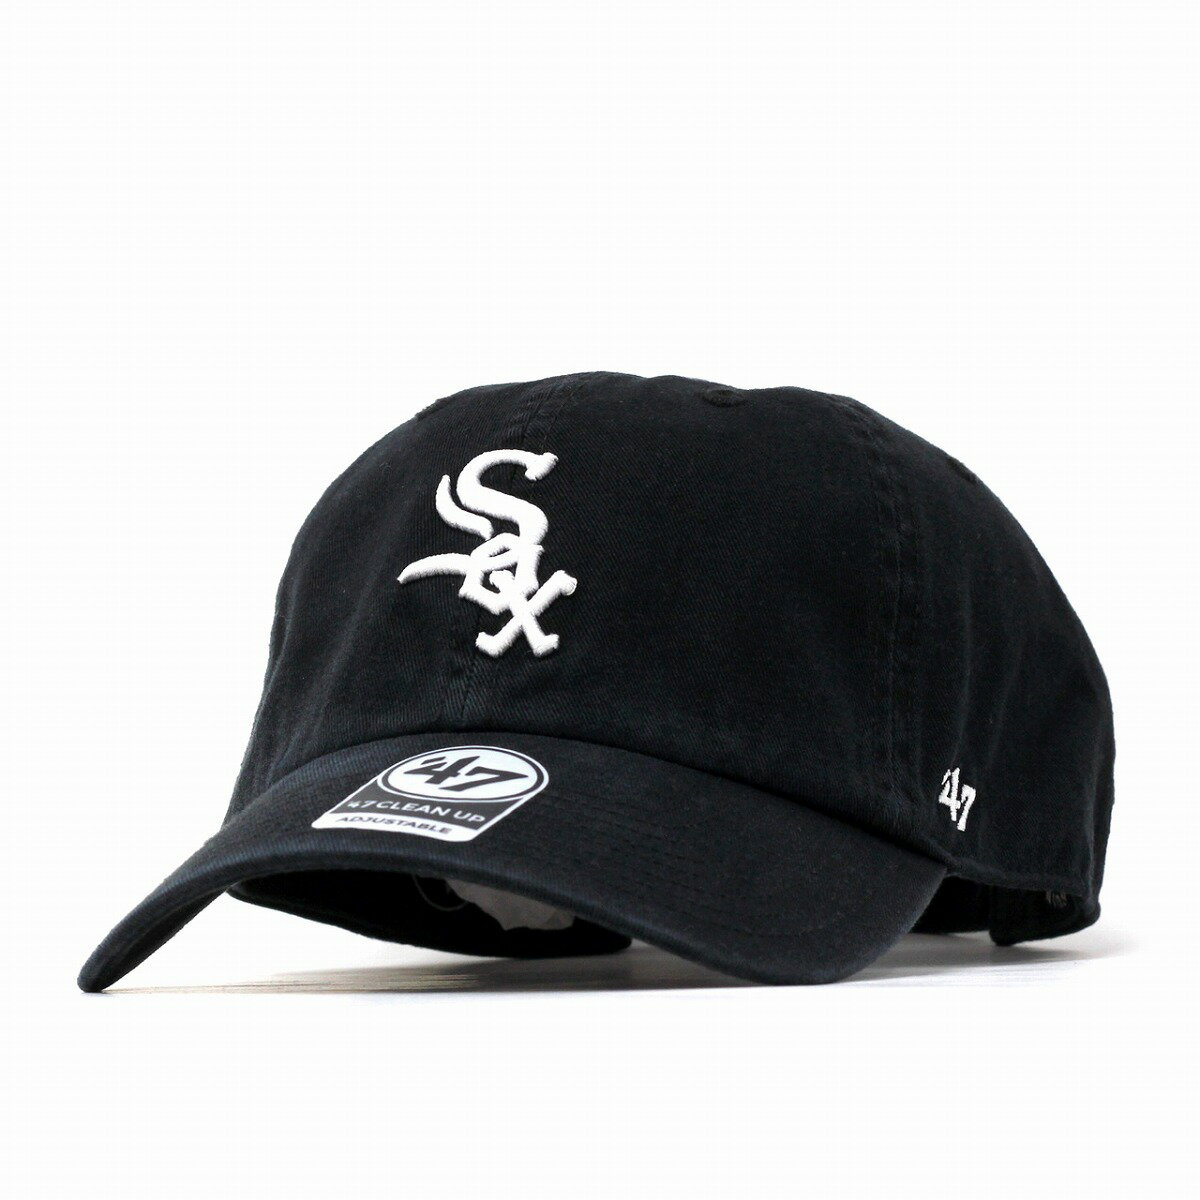 47brand クリーンナップ フォーティーセブン White sox Home '47 CLEAN UP Black ブラック フリーサイズ 帽子 SOX ロゴキャップ ソックス 野球 ベースボールキャップ シカゴ ホワイト・ソックス 黒×白 